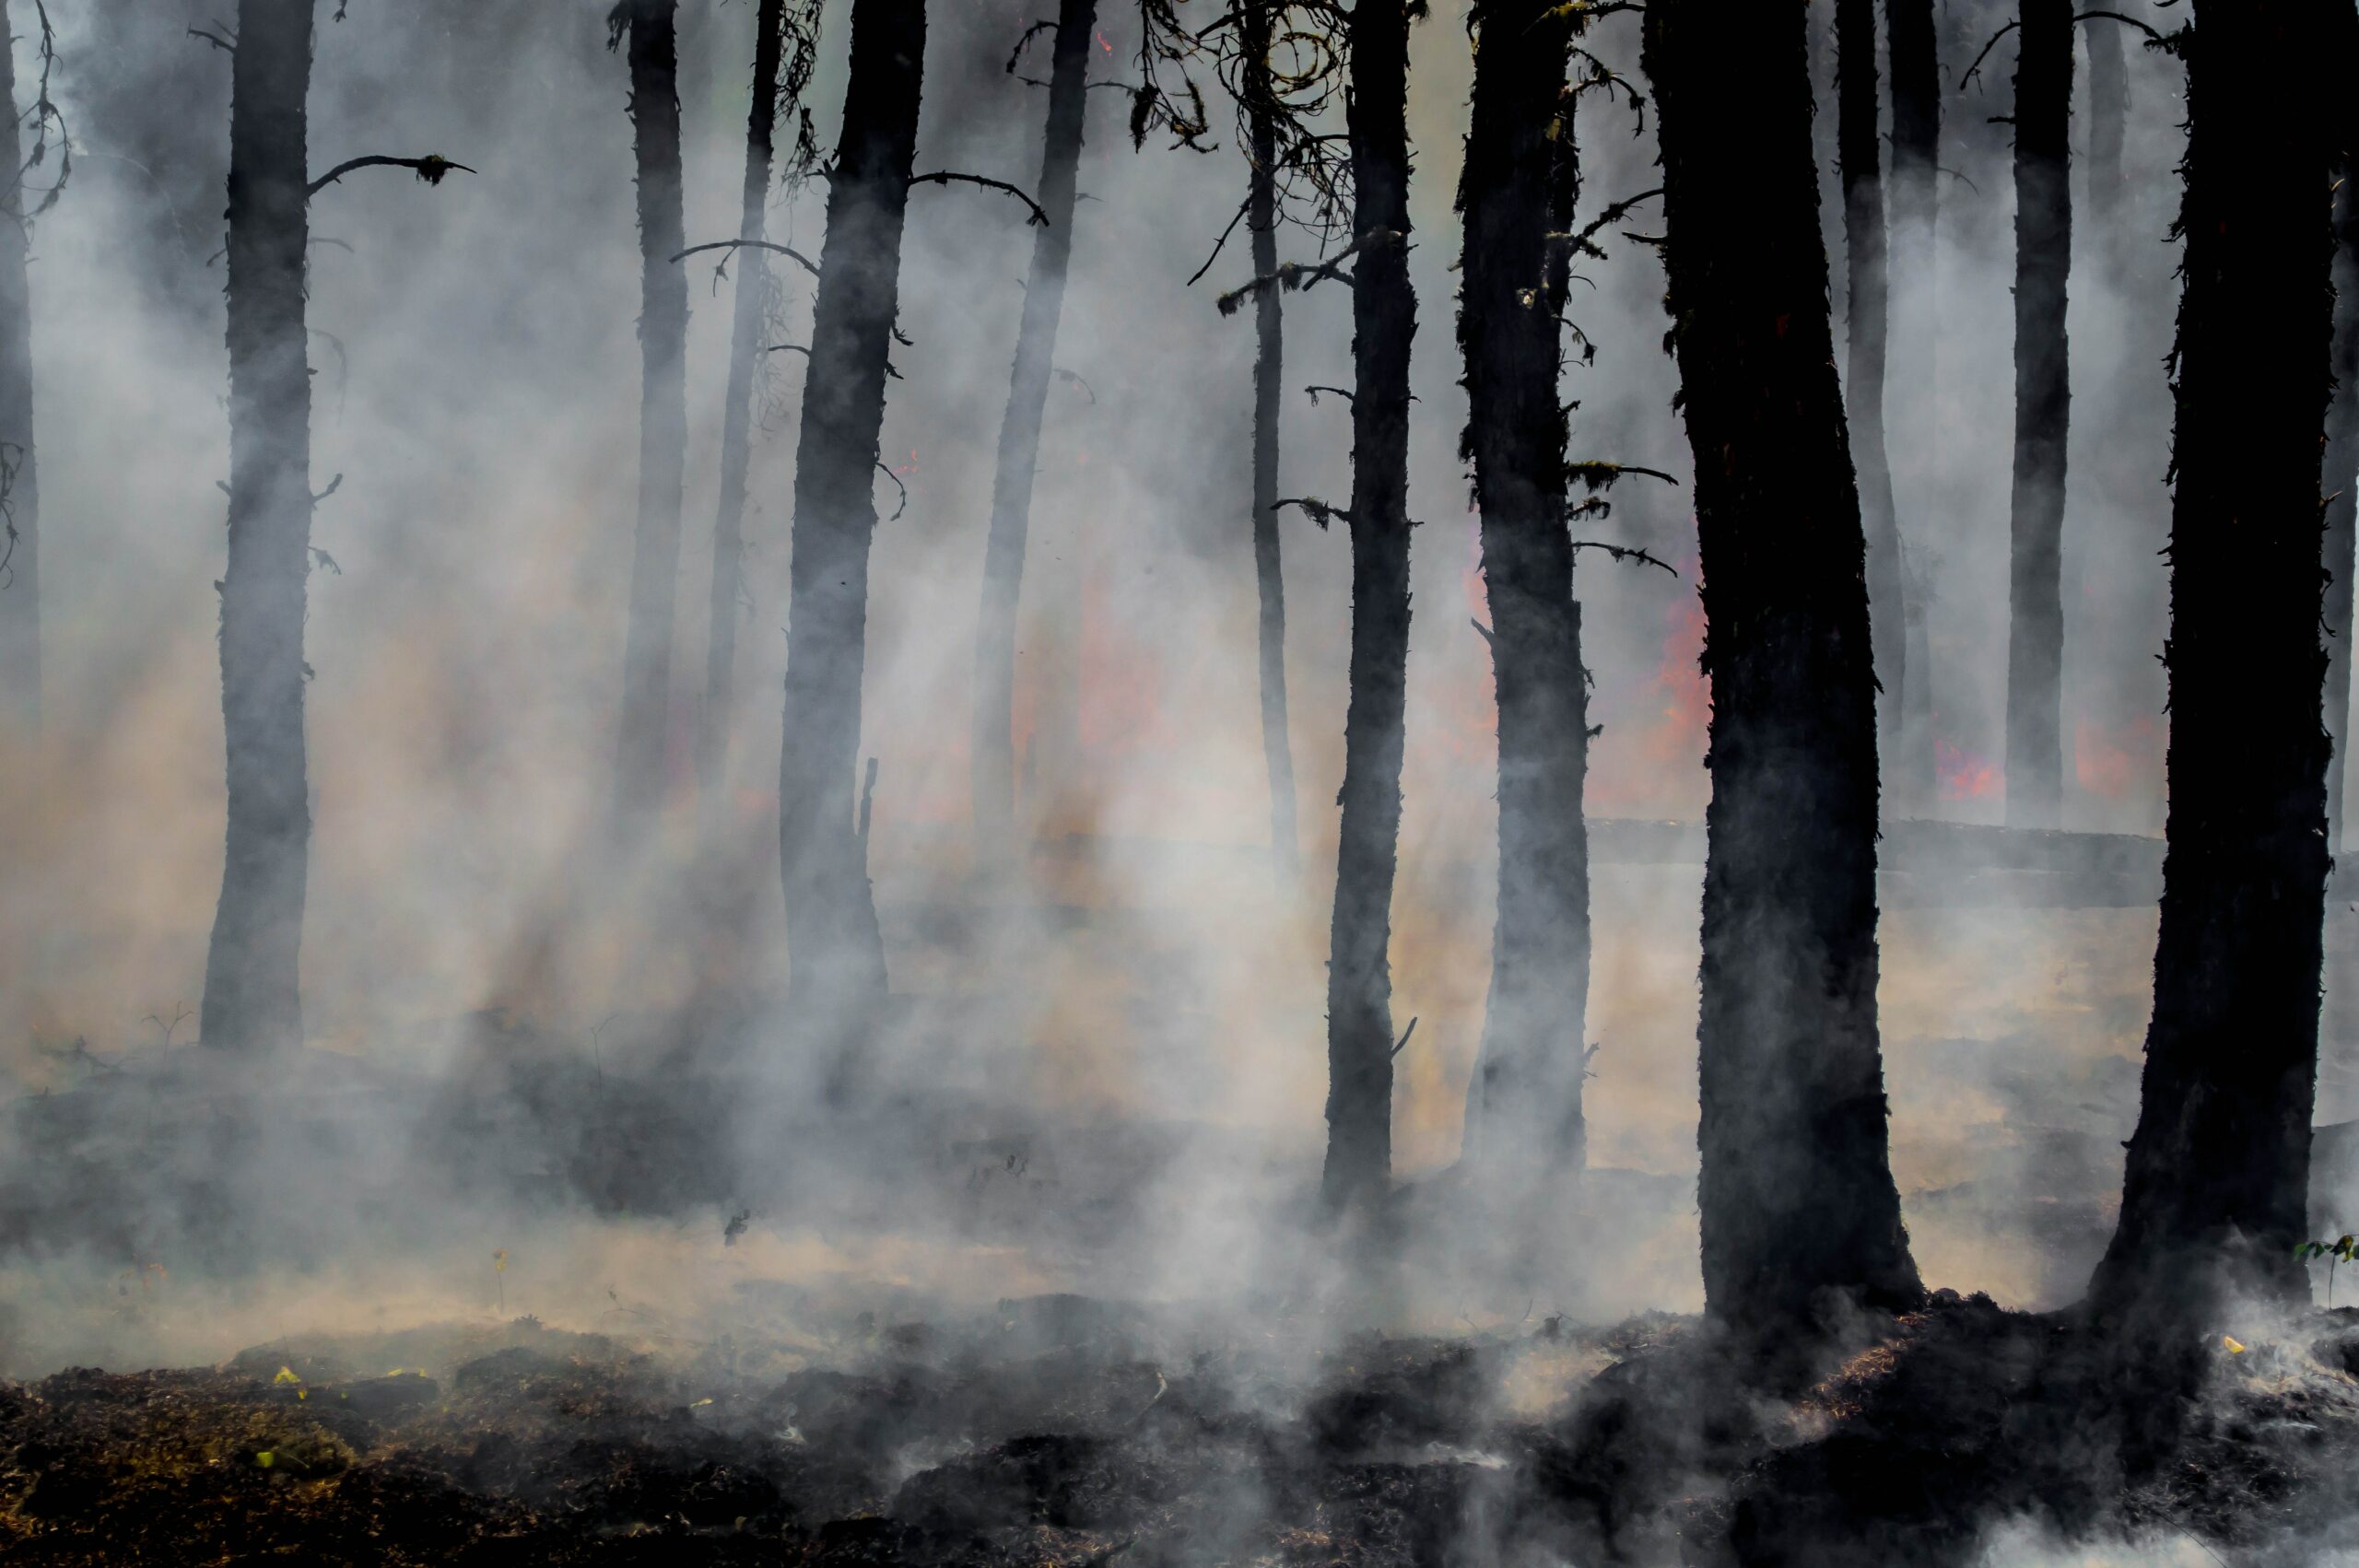 A smokey forest, after a fire